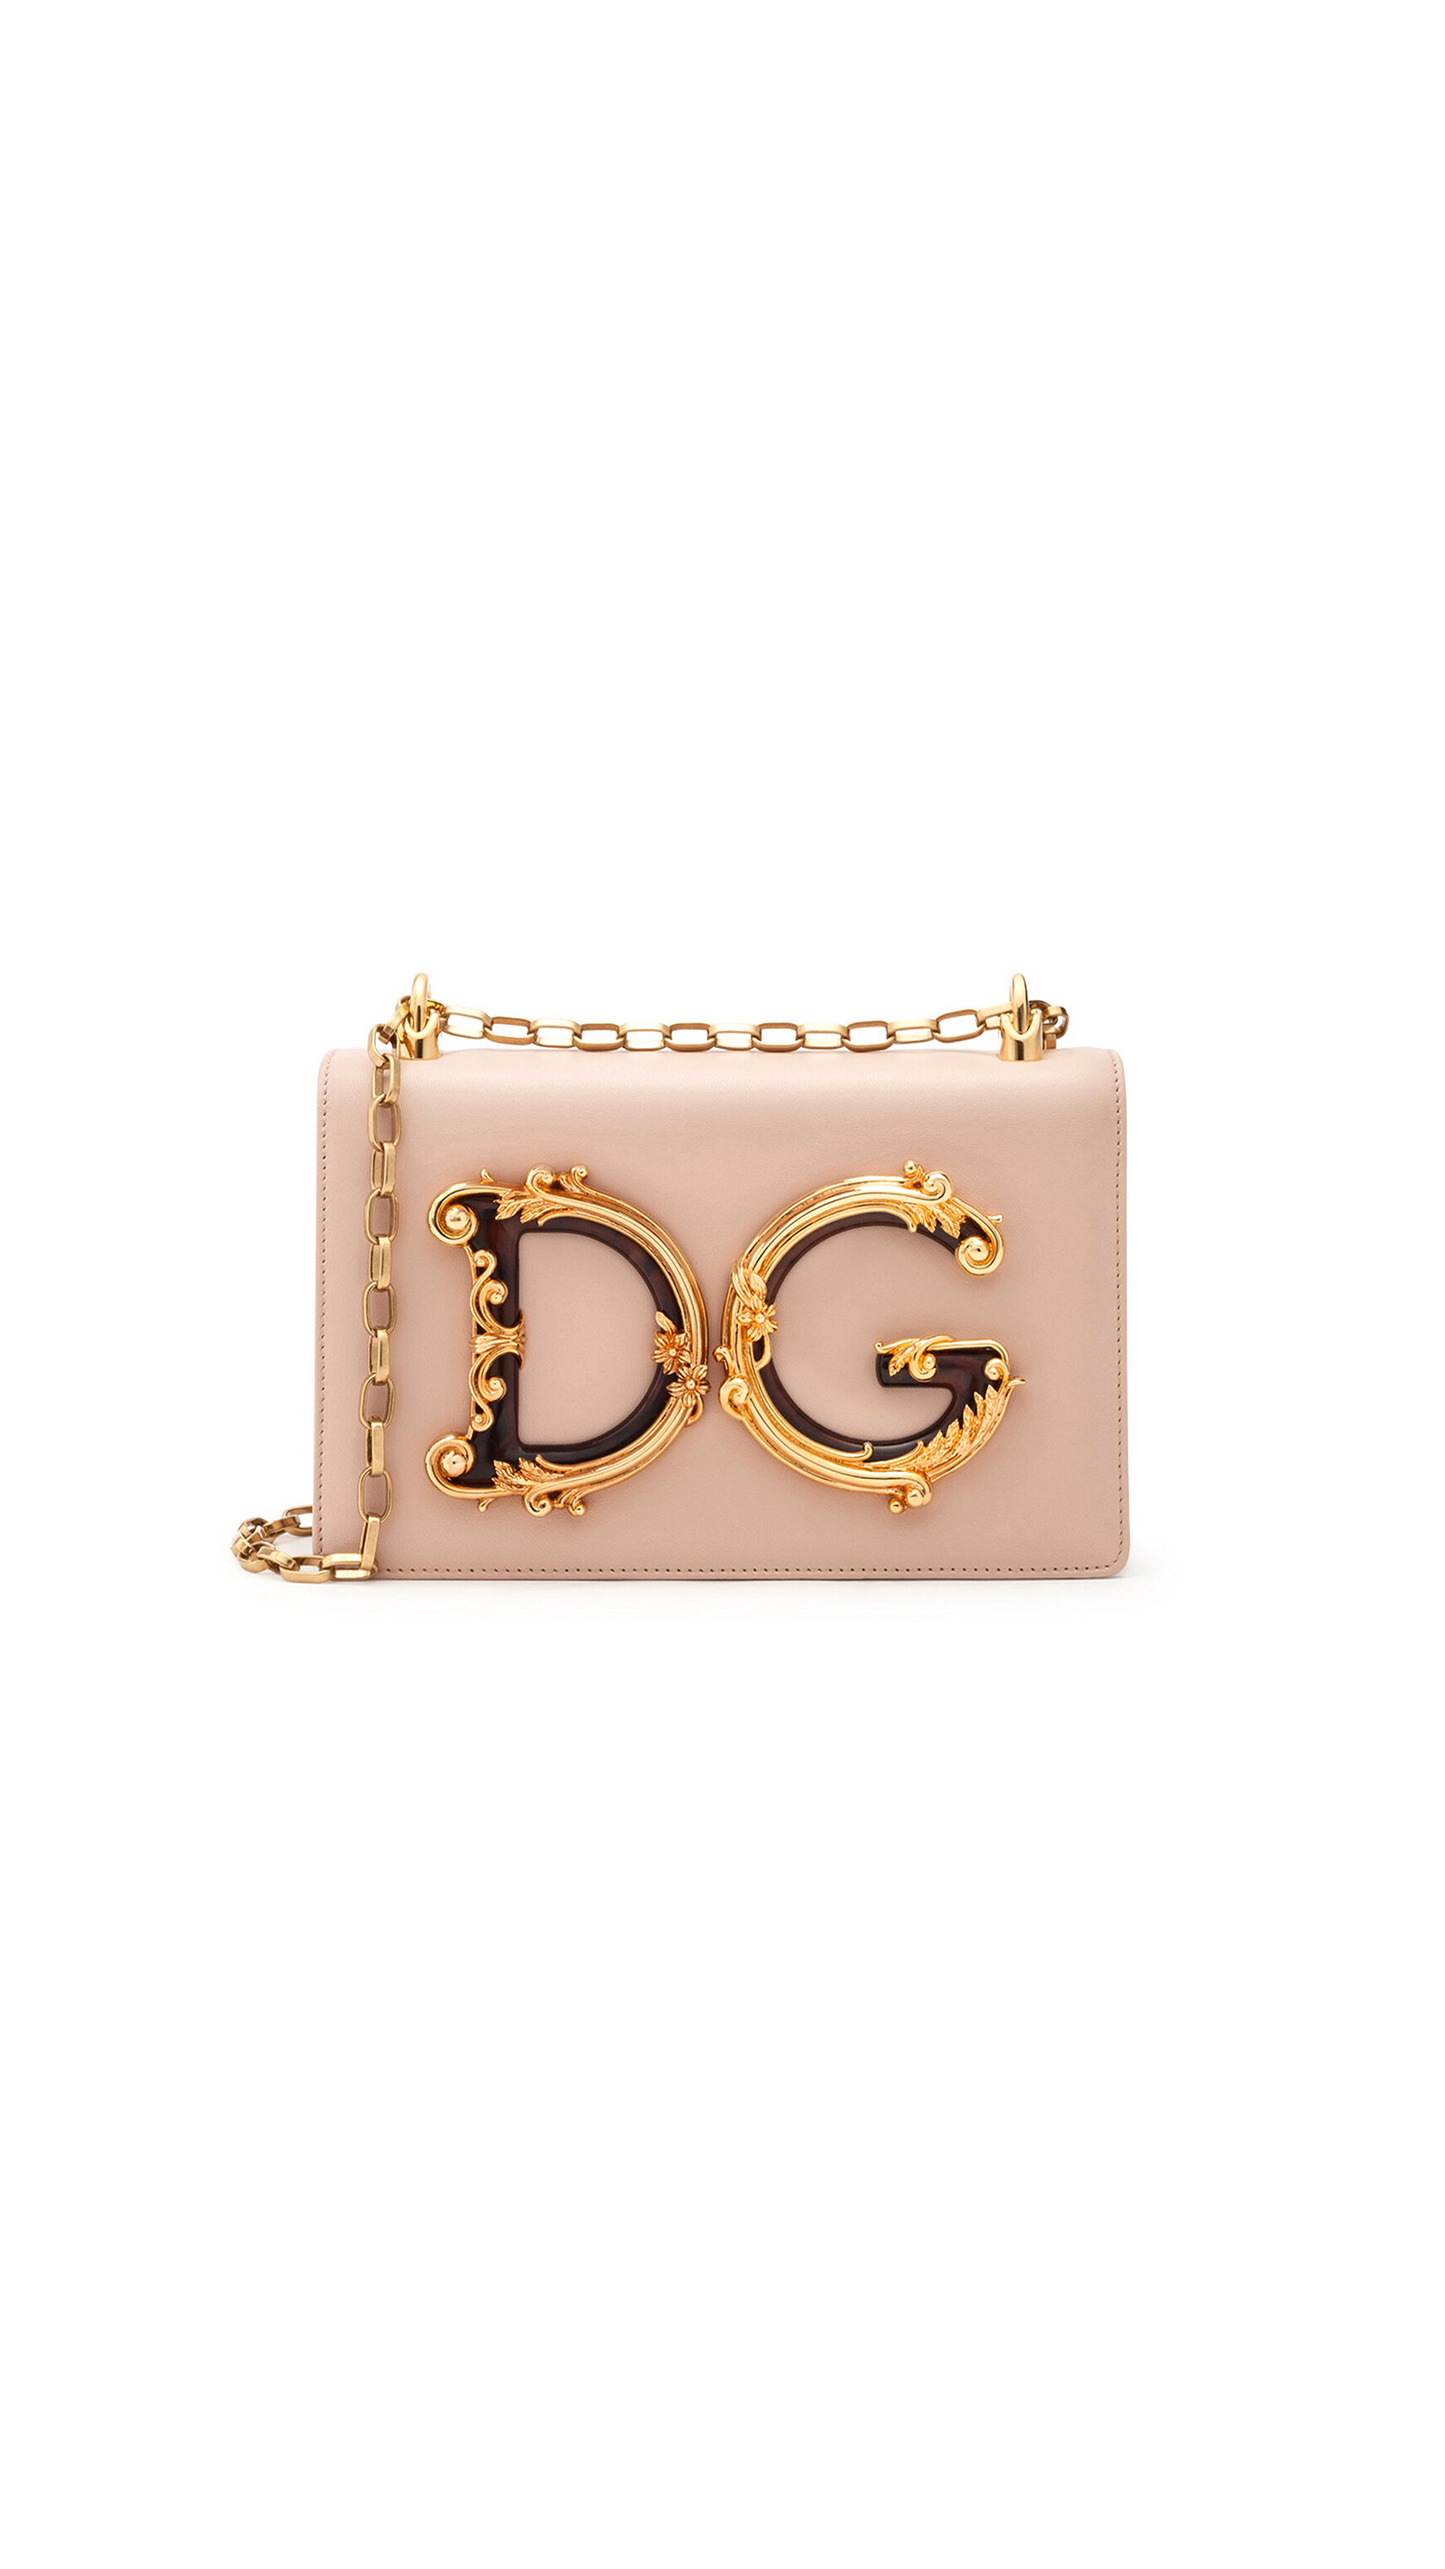 Nappa leather DG Girls bag - Pale Pink